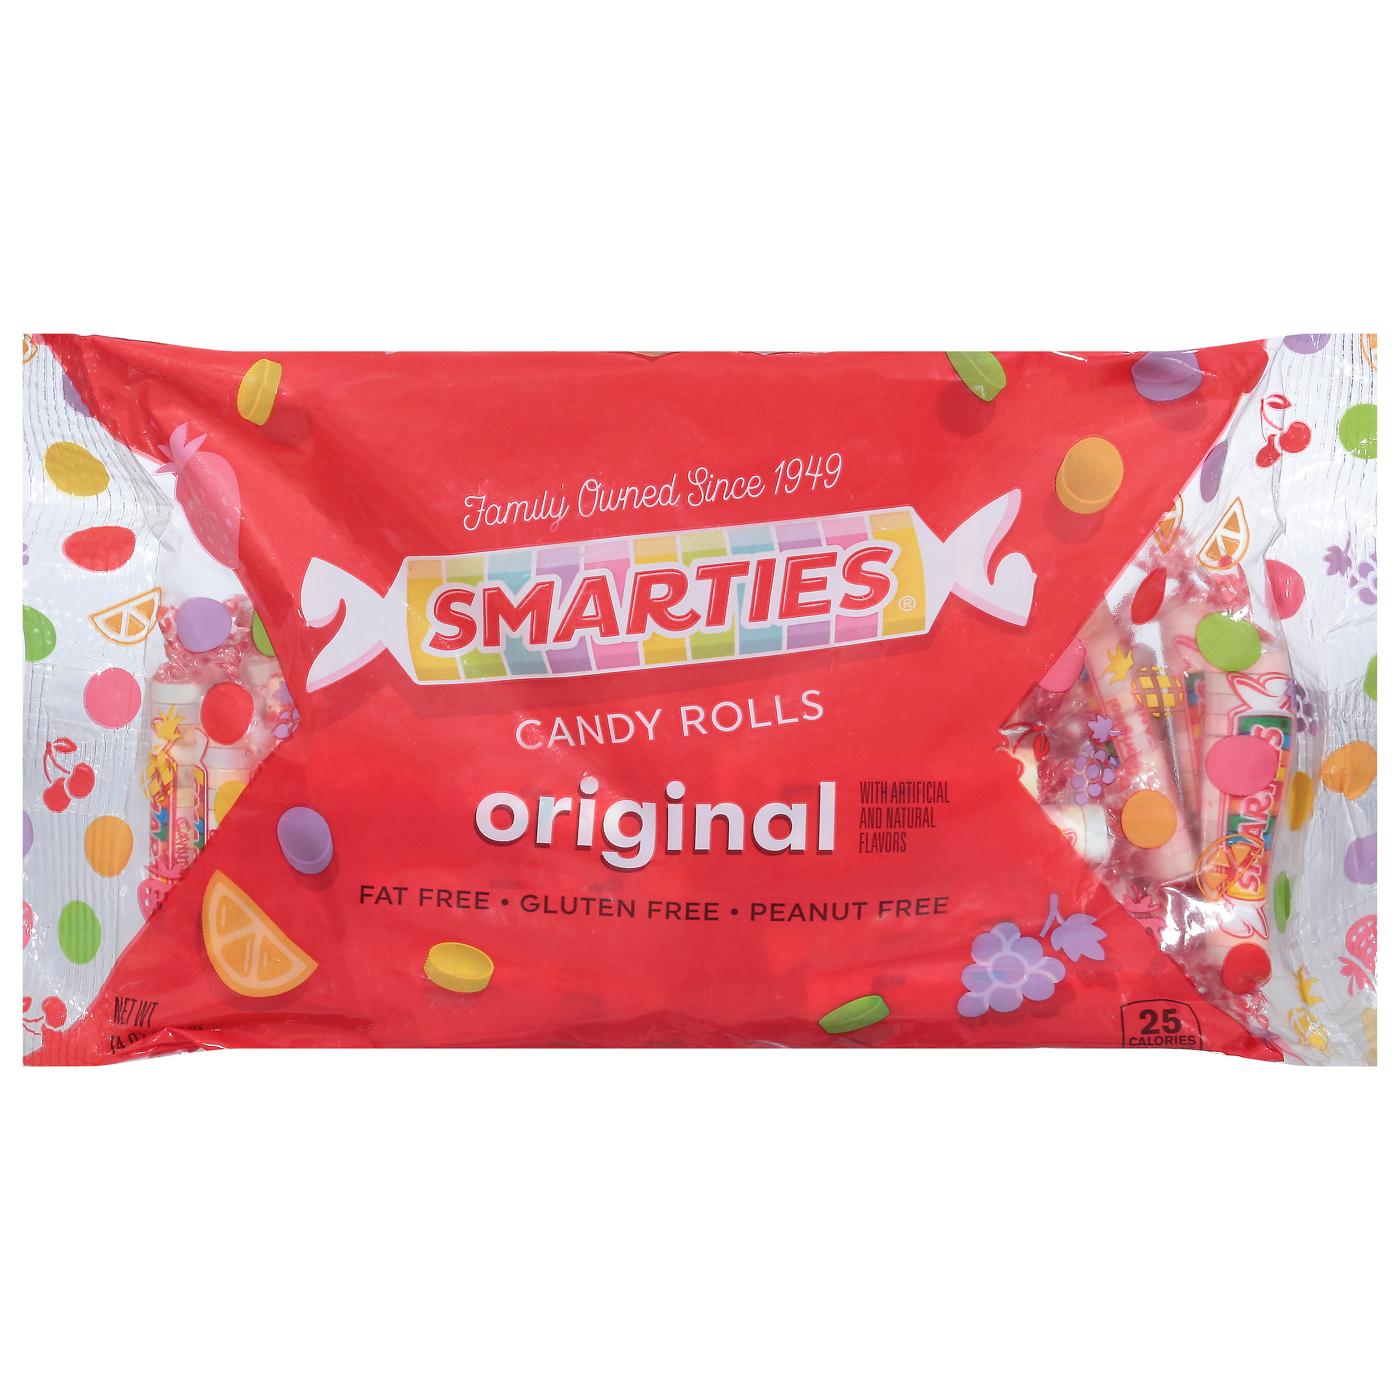 Smarties Original Candy Rolls; image 1 of 2